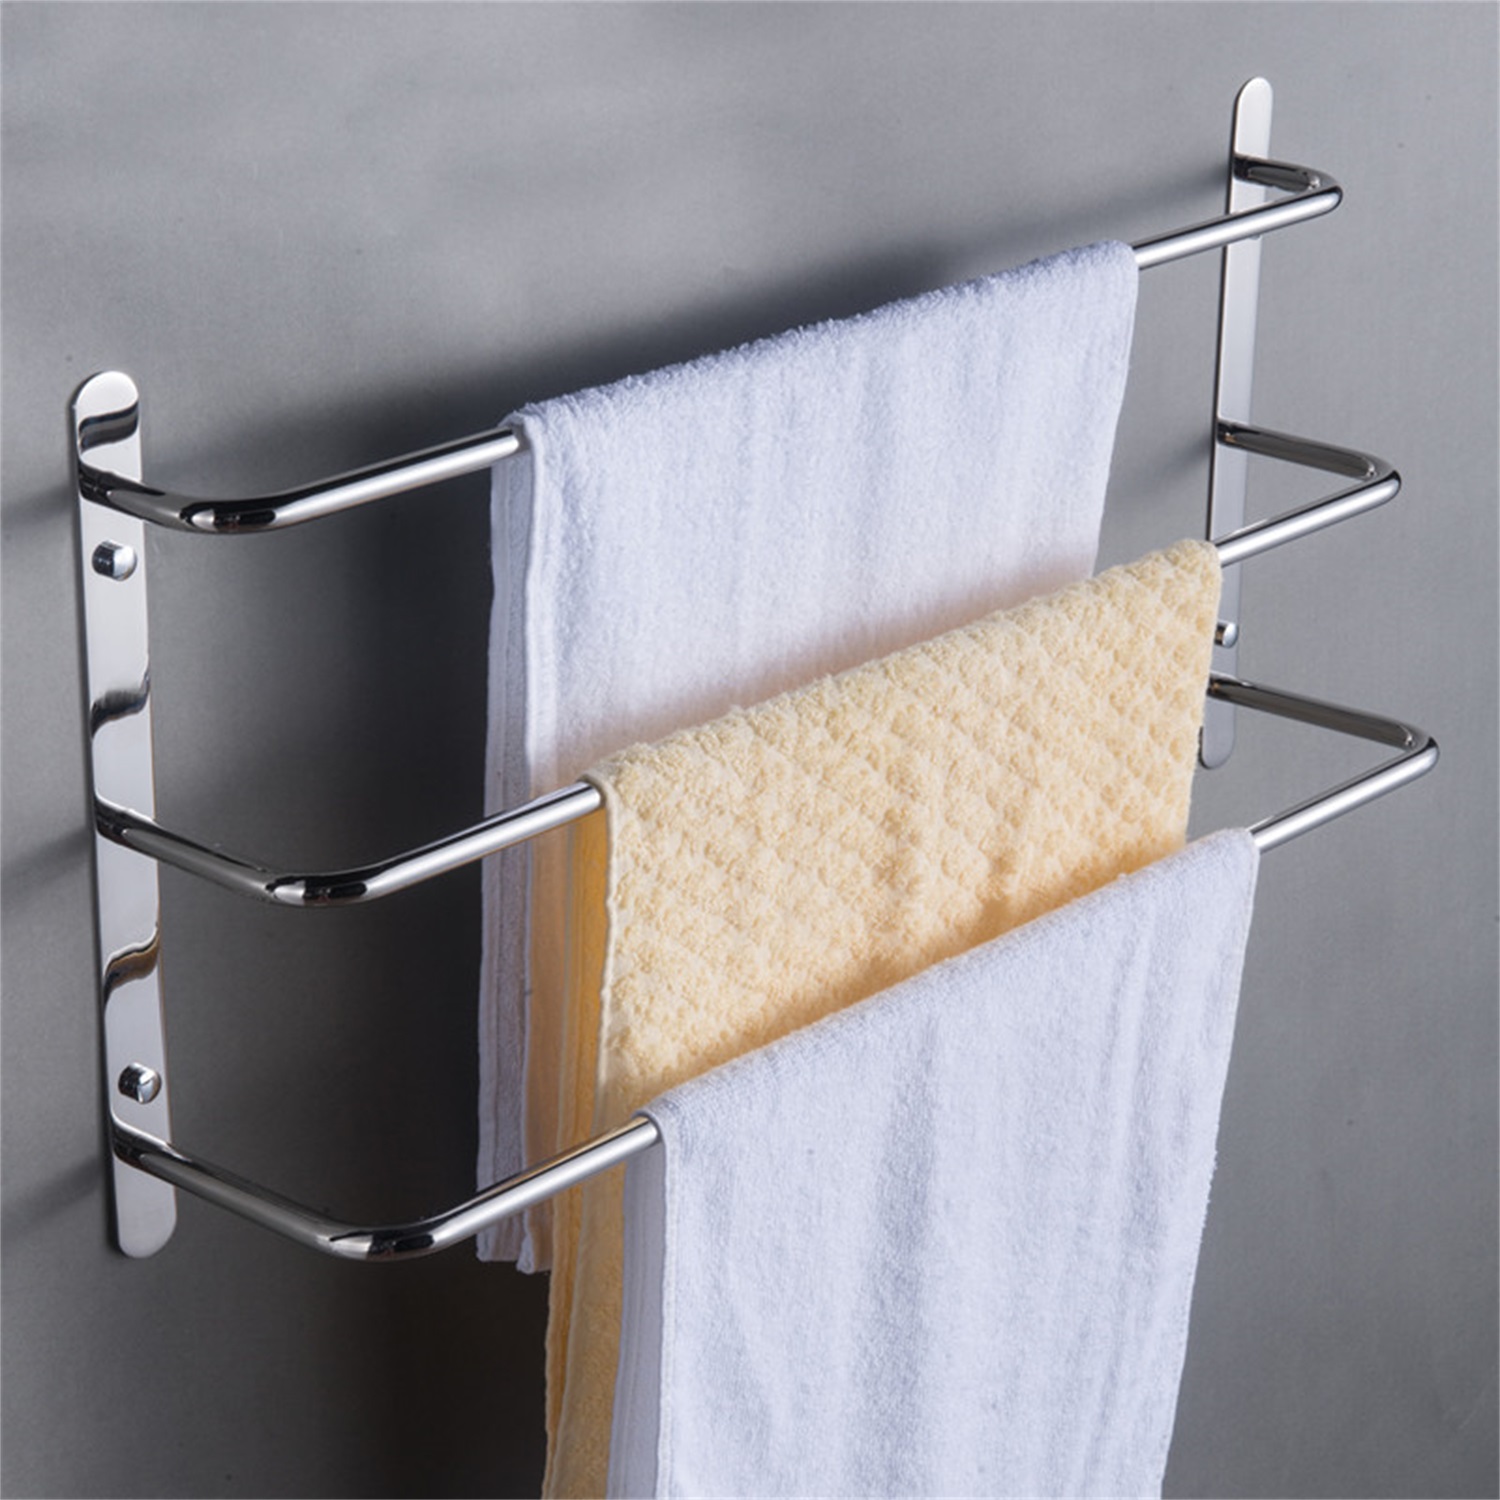 Lowestbest 304 Stainless Steel Three Towel Bars, Wall Mounted Multilayer Towel Rack, Bathroom Accessories Metal Rod, 18" Silver - image 1 of 7